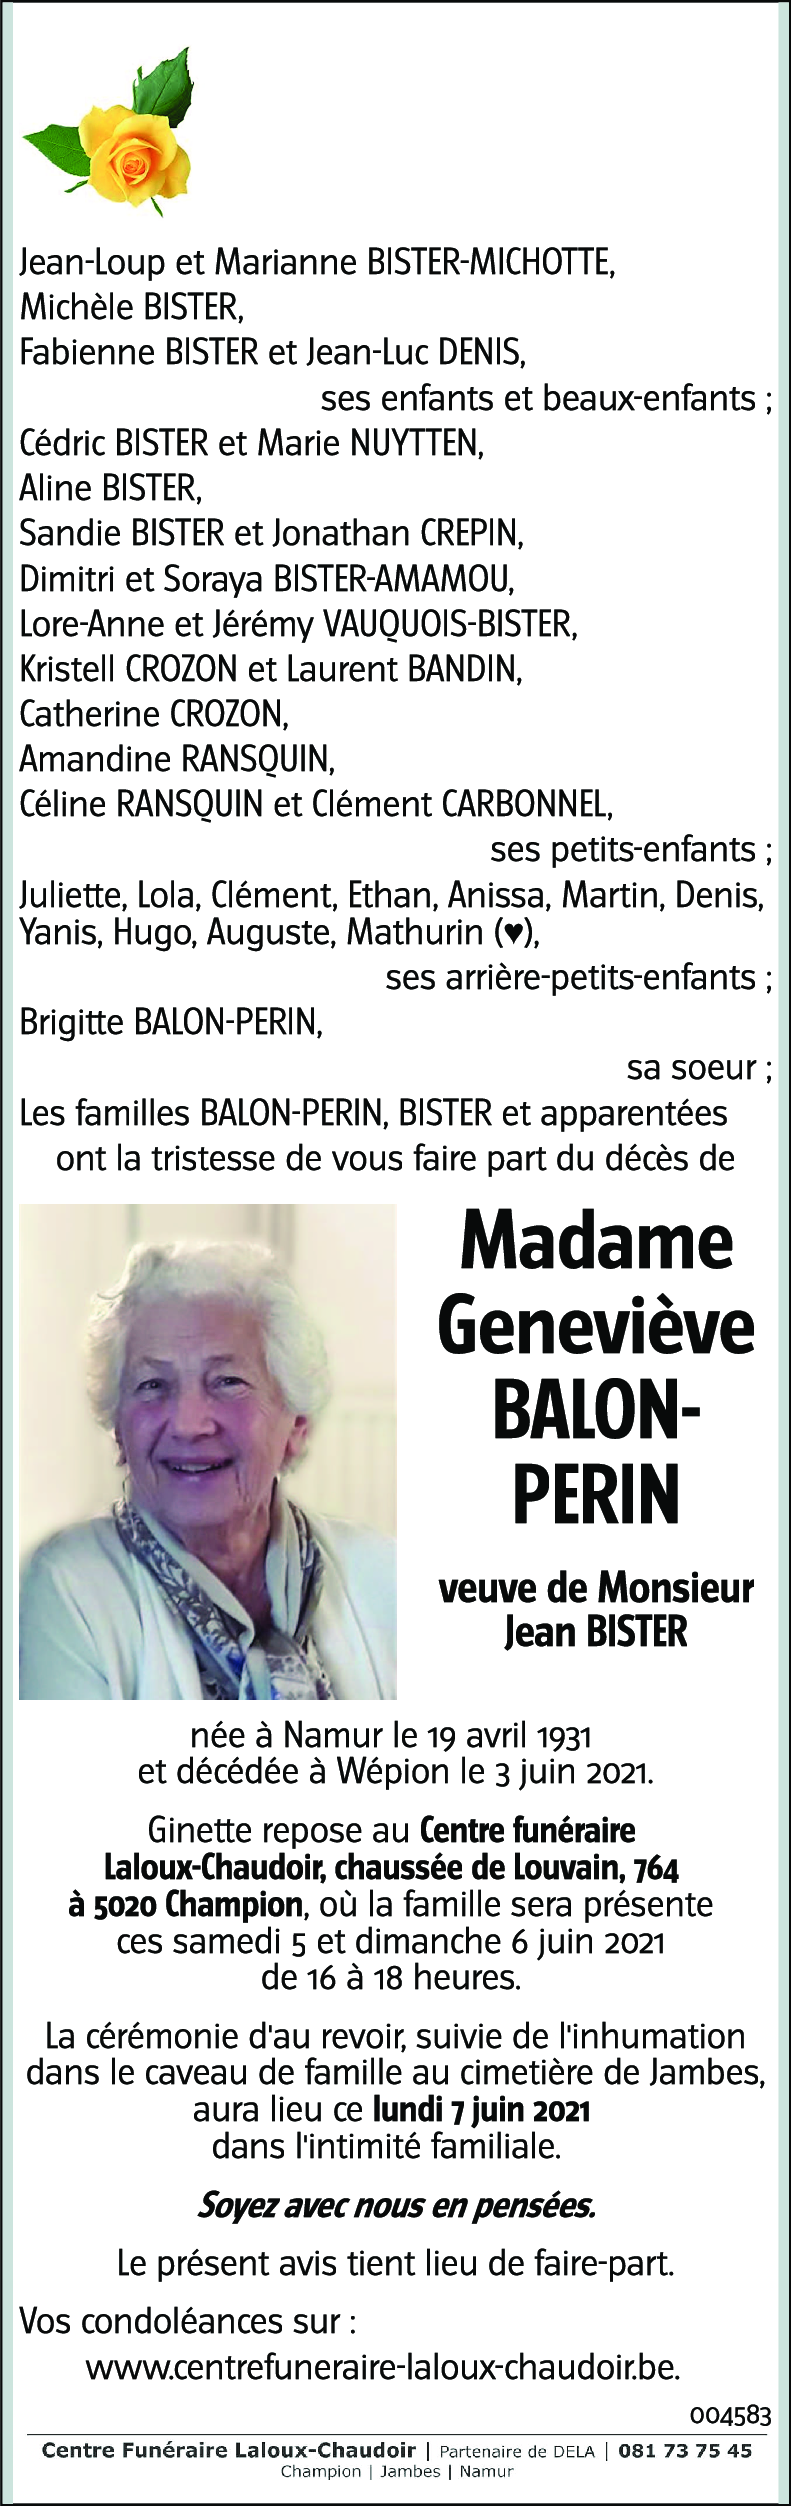 Geneviève BALON-PERIN